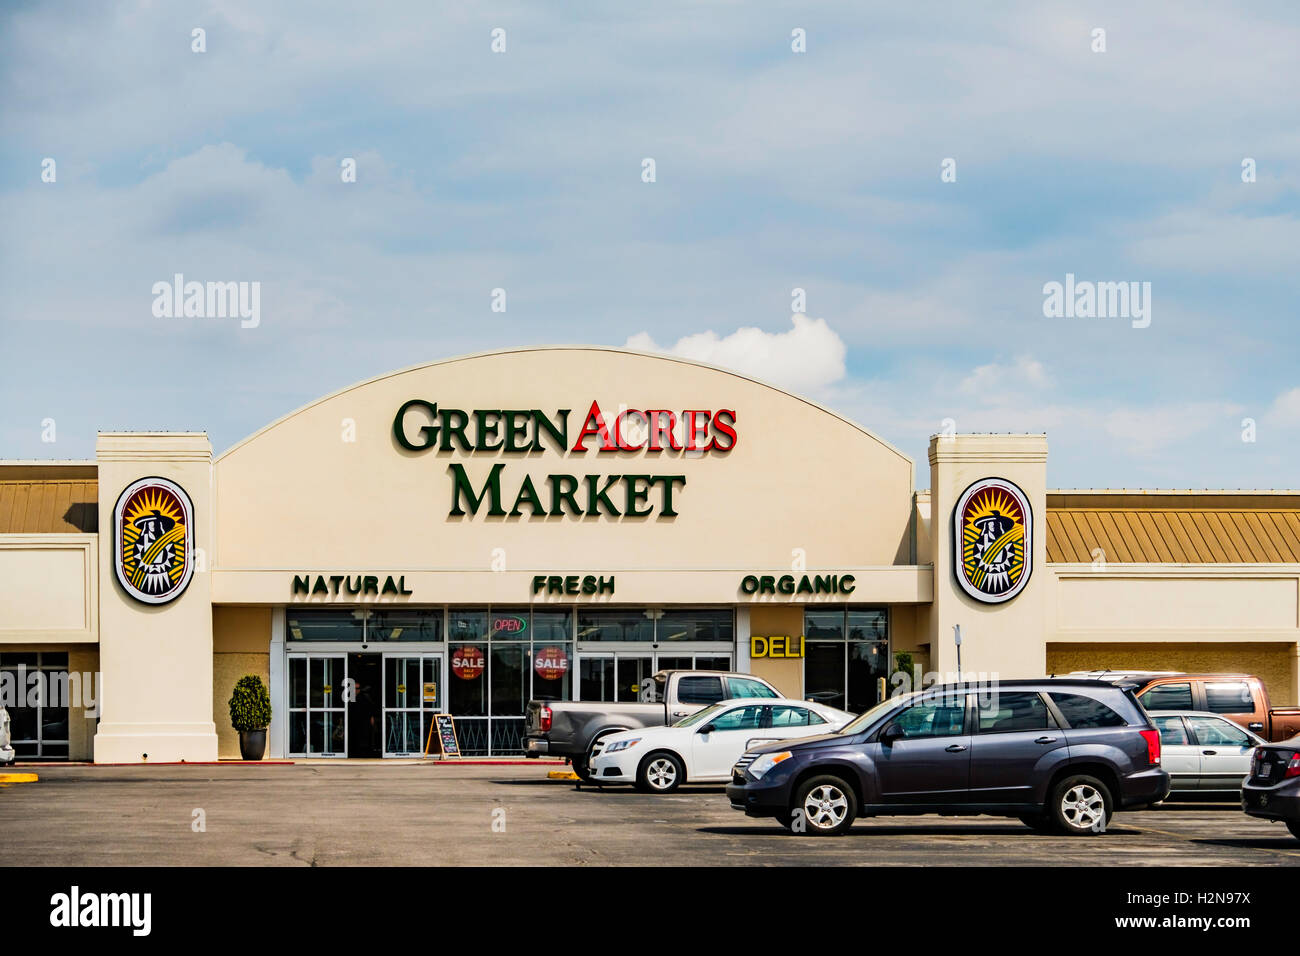 Exterior of Green Acres Market I-240 & Penn, Oklahoma City, Oklahoma, USA. A market selling organic and fresh foods. Stock Photo